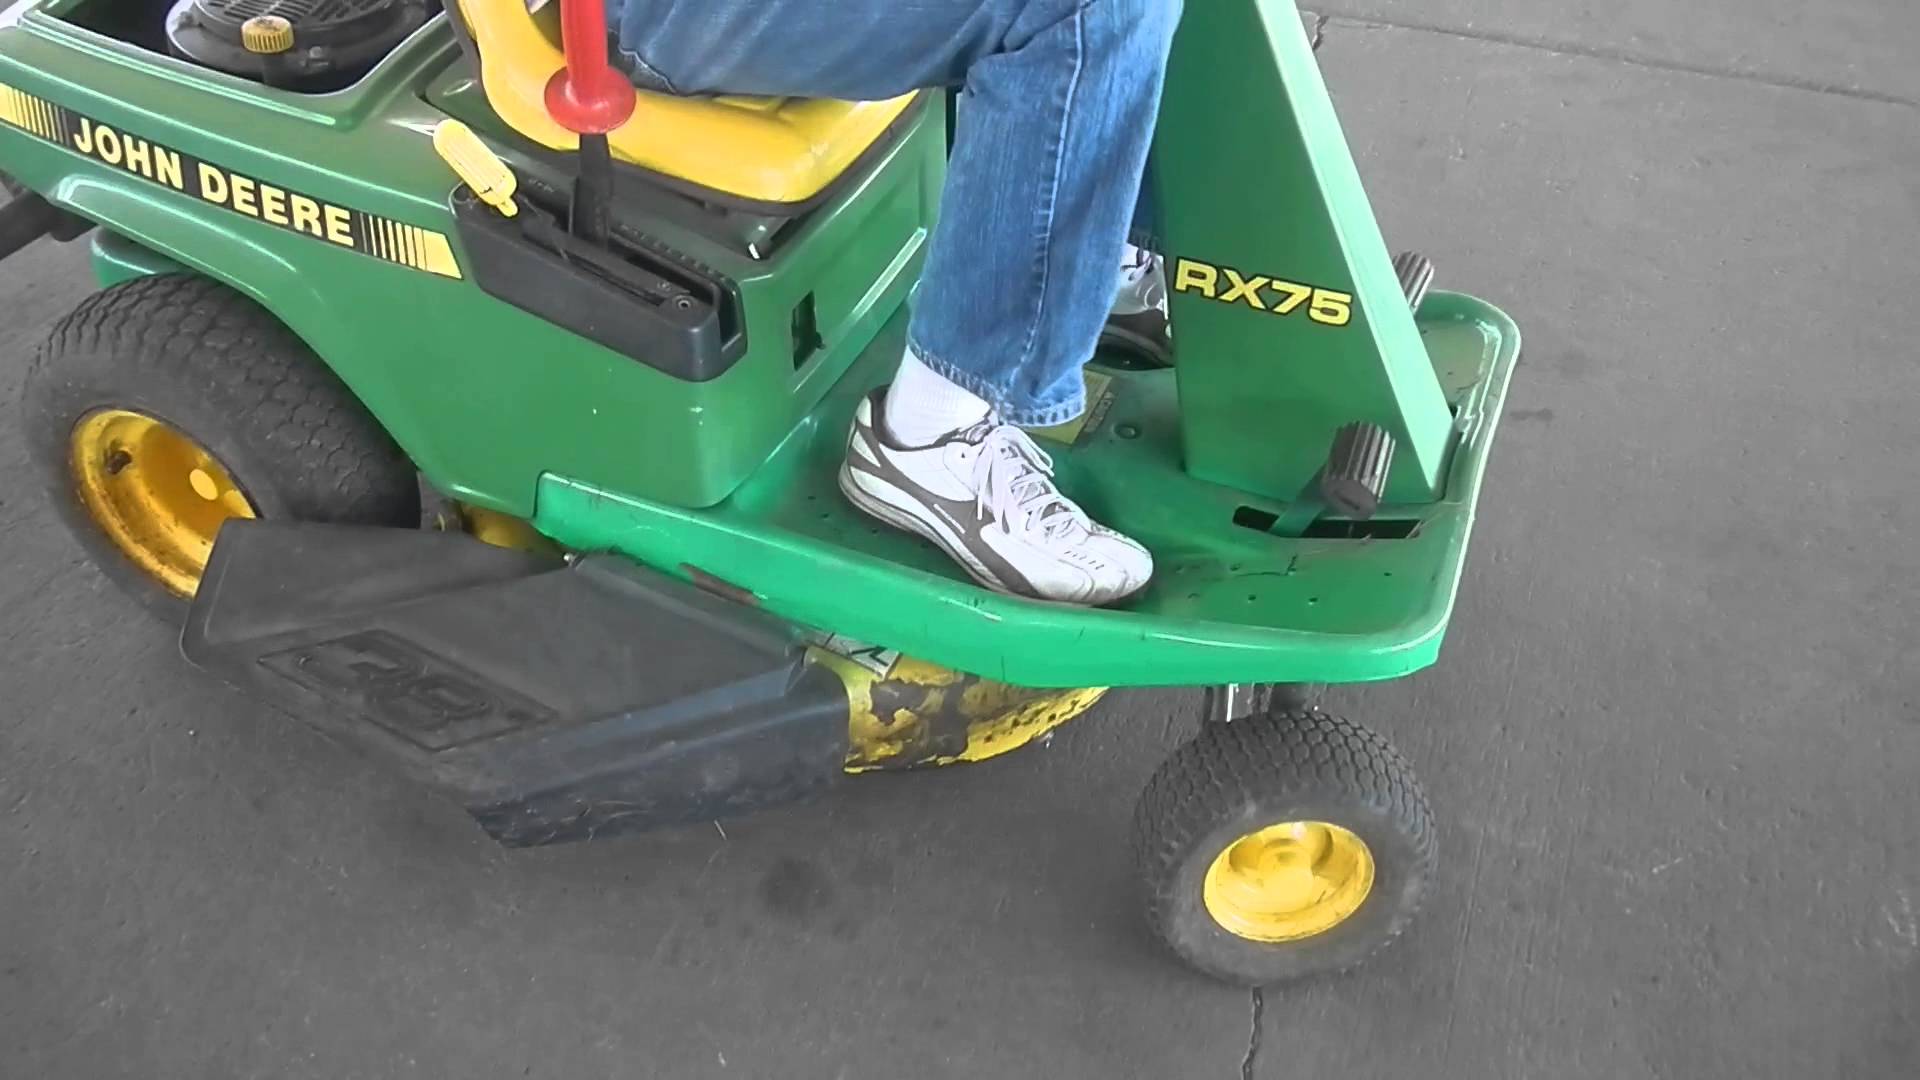 John Deere Riding Mower RX75 - YouTube